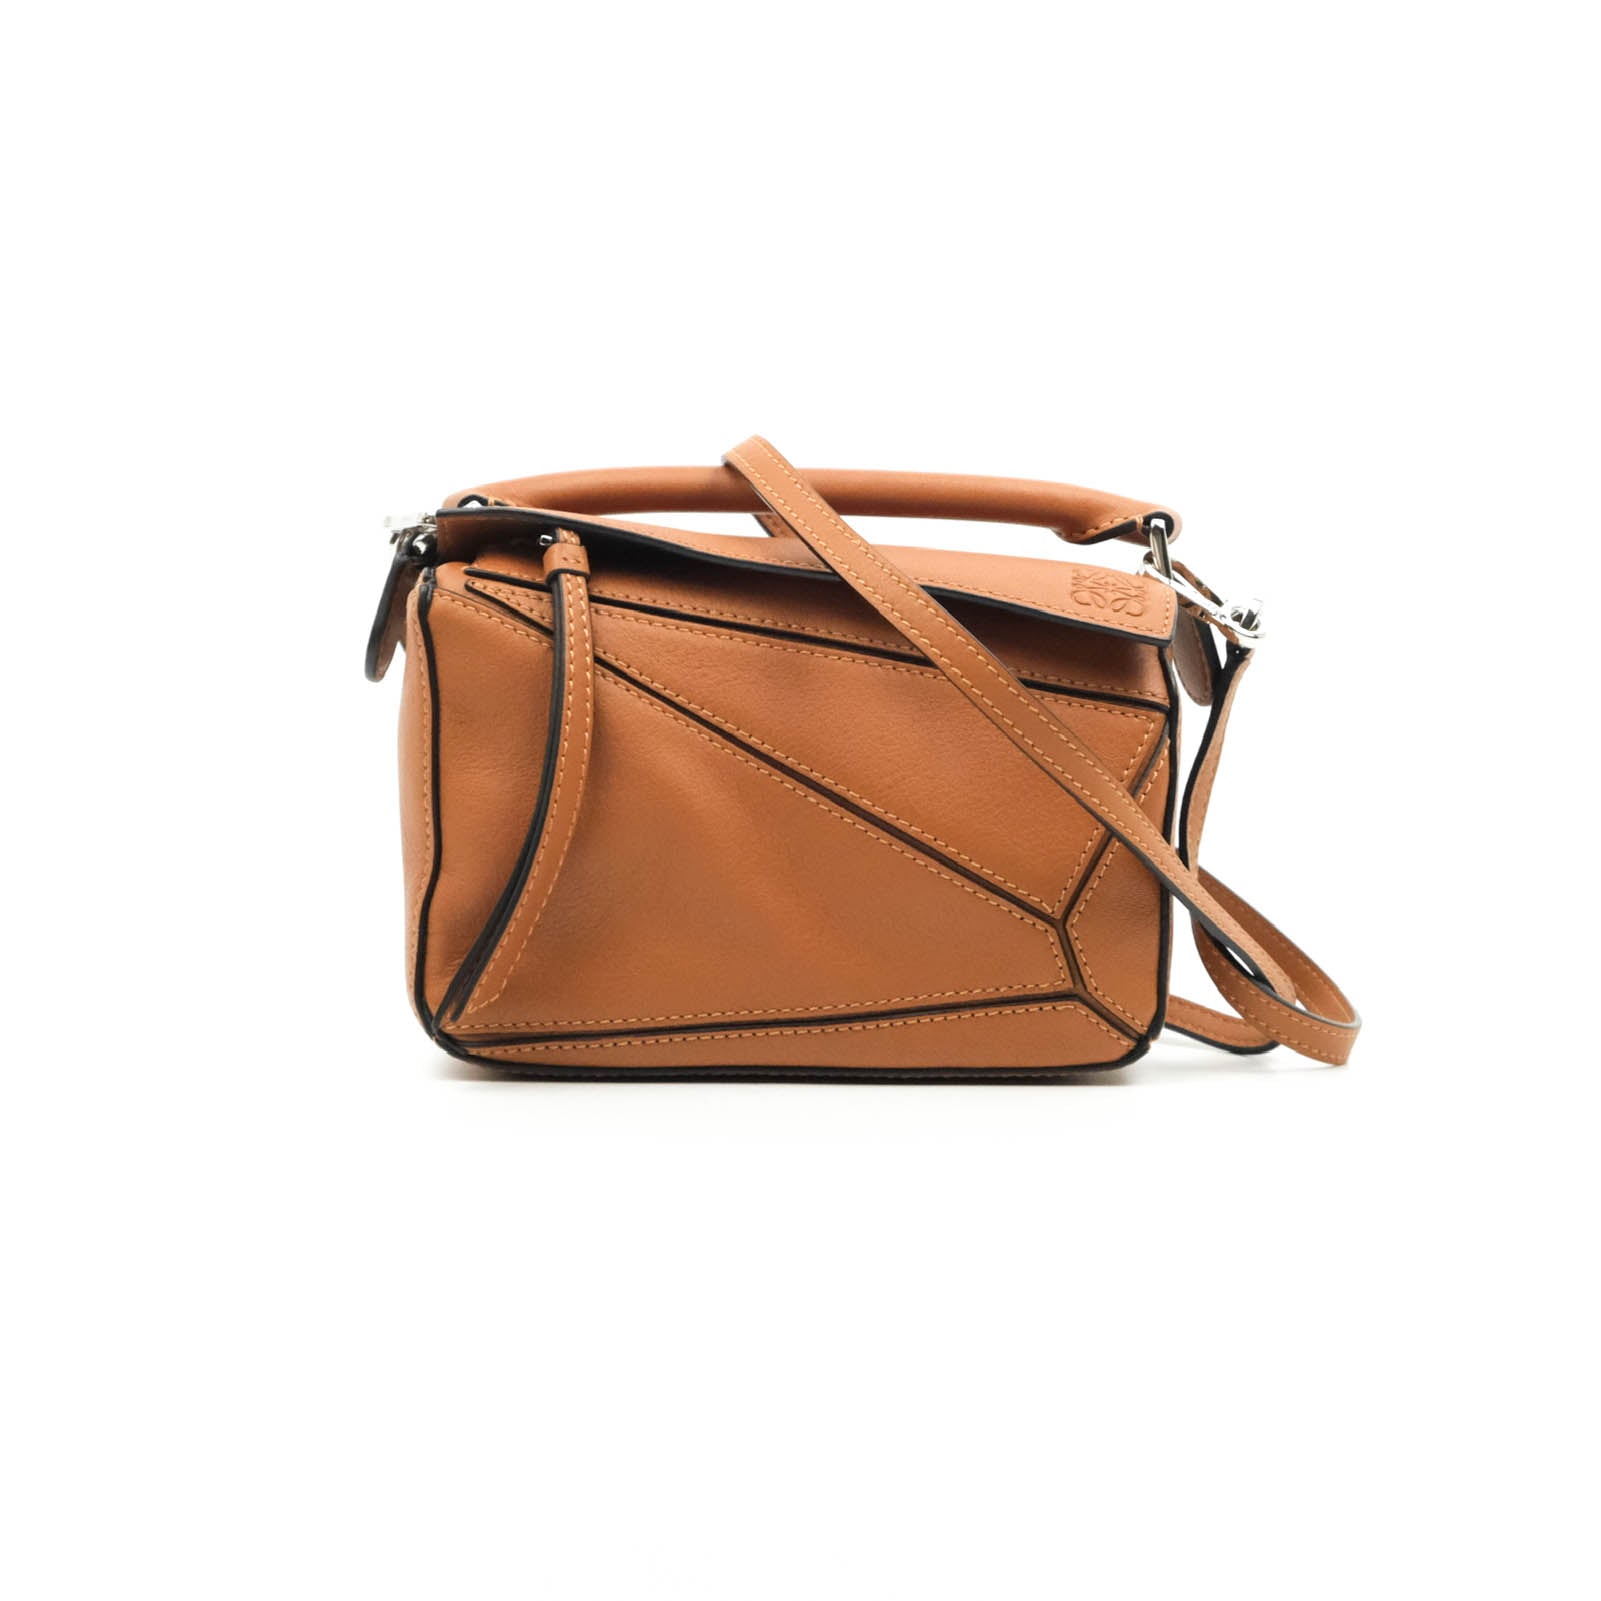 Loewe Small Balloon Bucket Bag Black Tan Calfskin – Coco Approved Studio